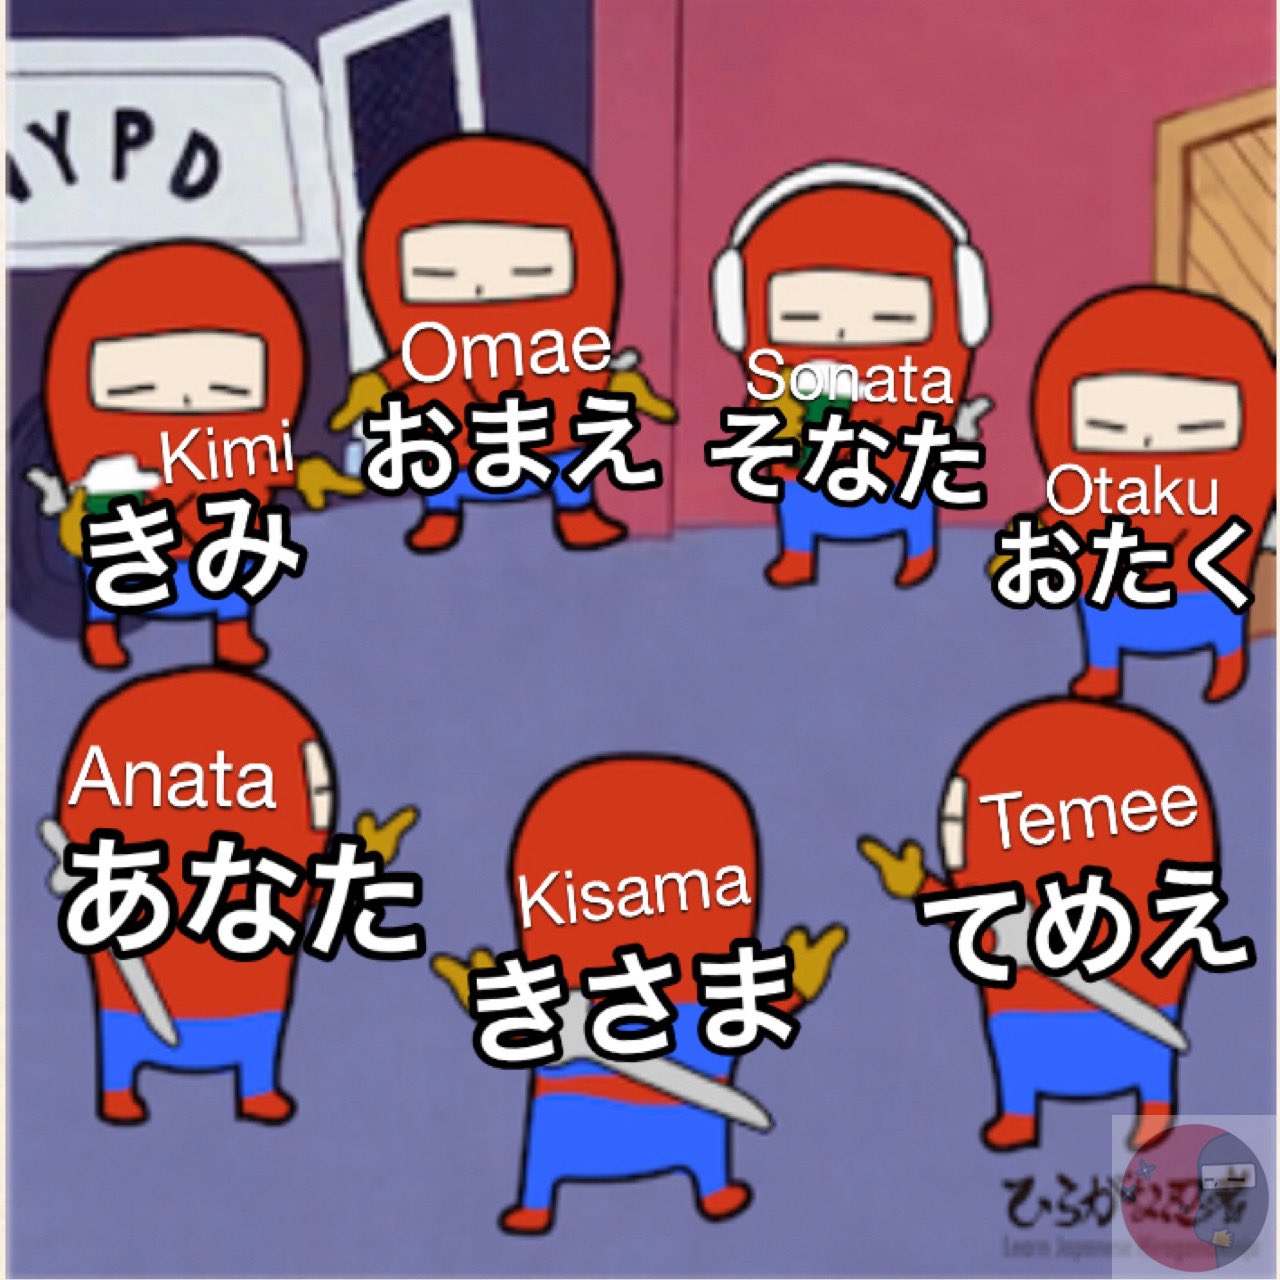 Anata, Omae, Temee, Kimi, Kisama あなた, お前, てめぇ, 君, 貴様